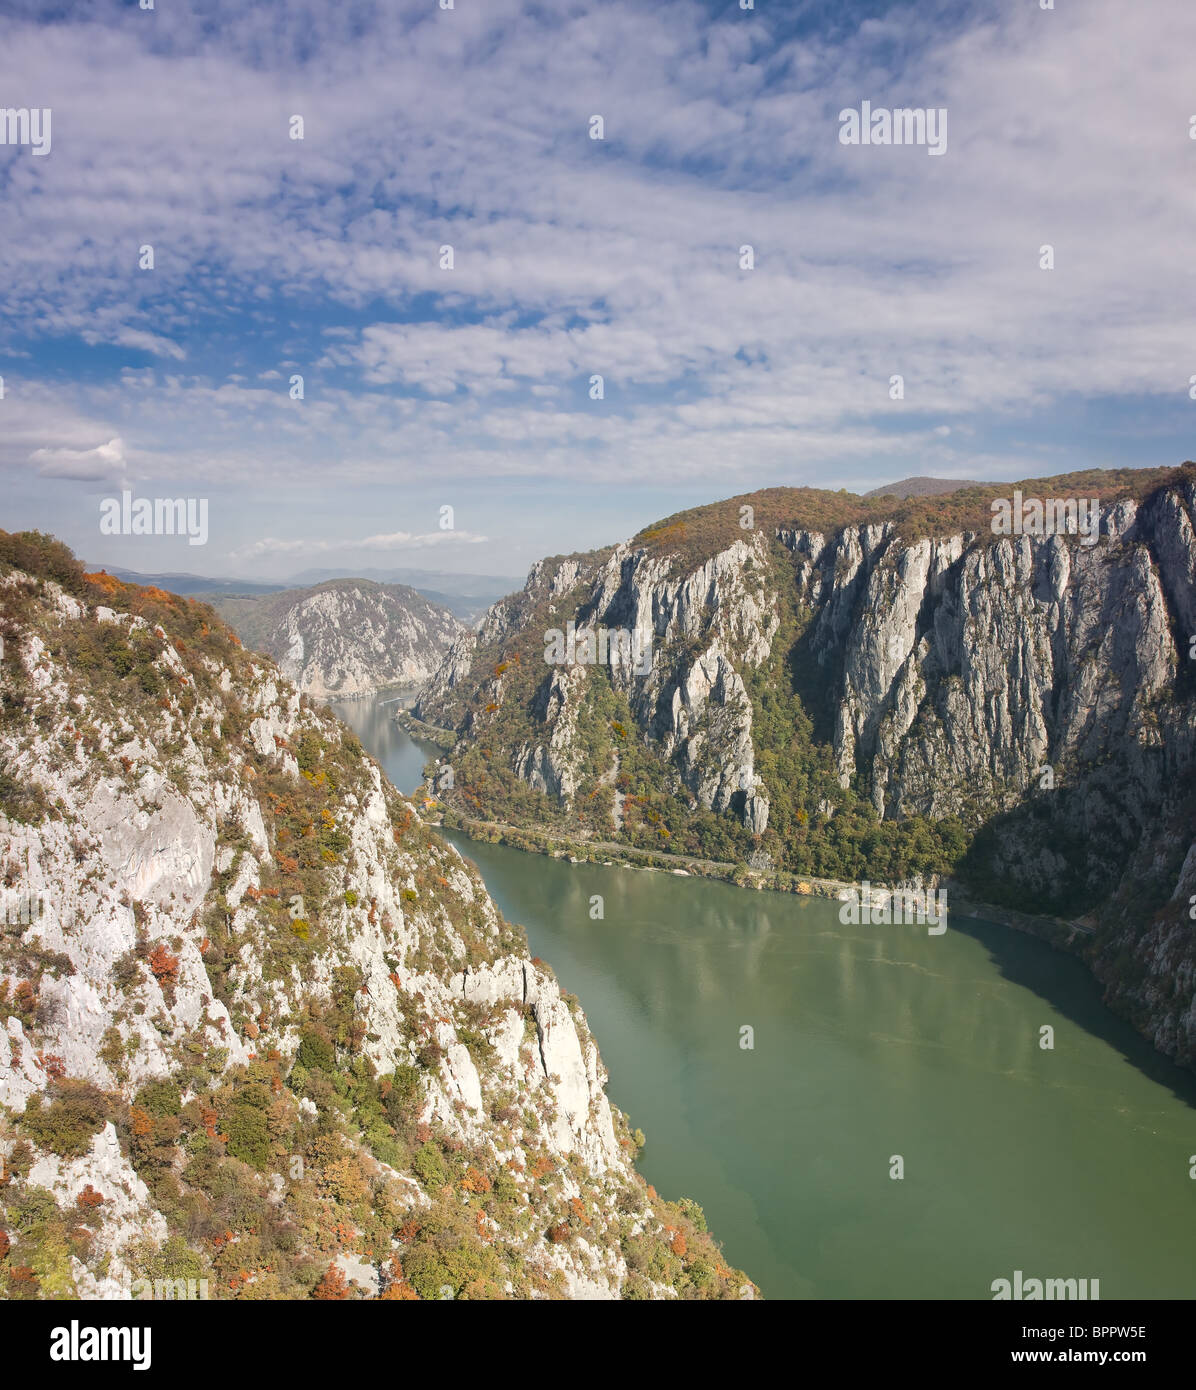 The 'Cazanele Mici' Canyon on Danube River in Romania. Stock Photo